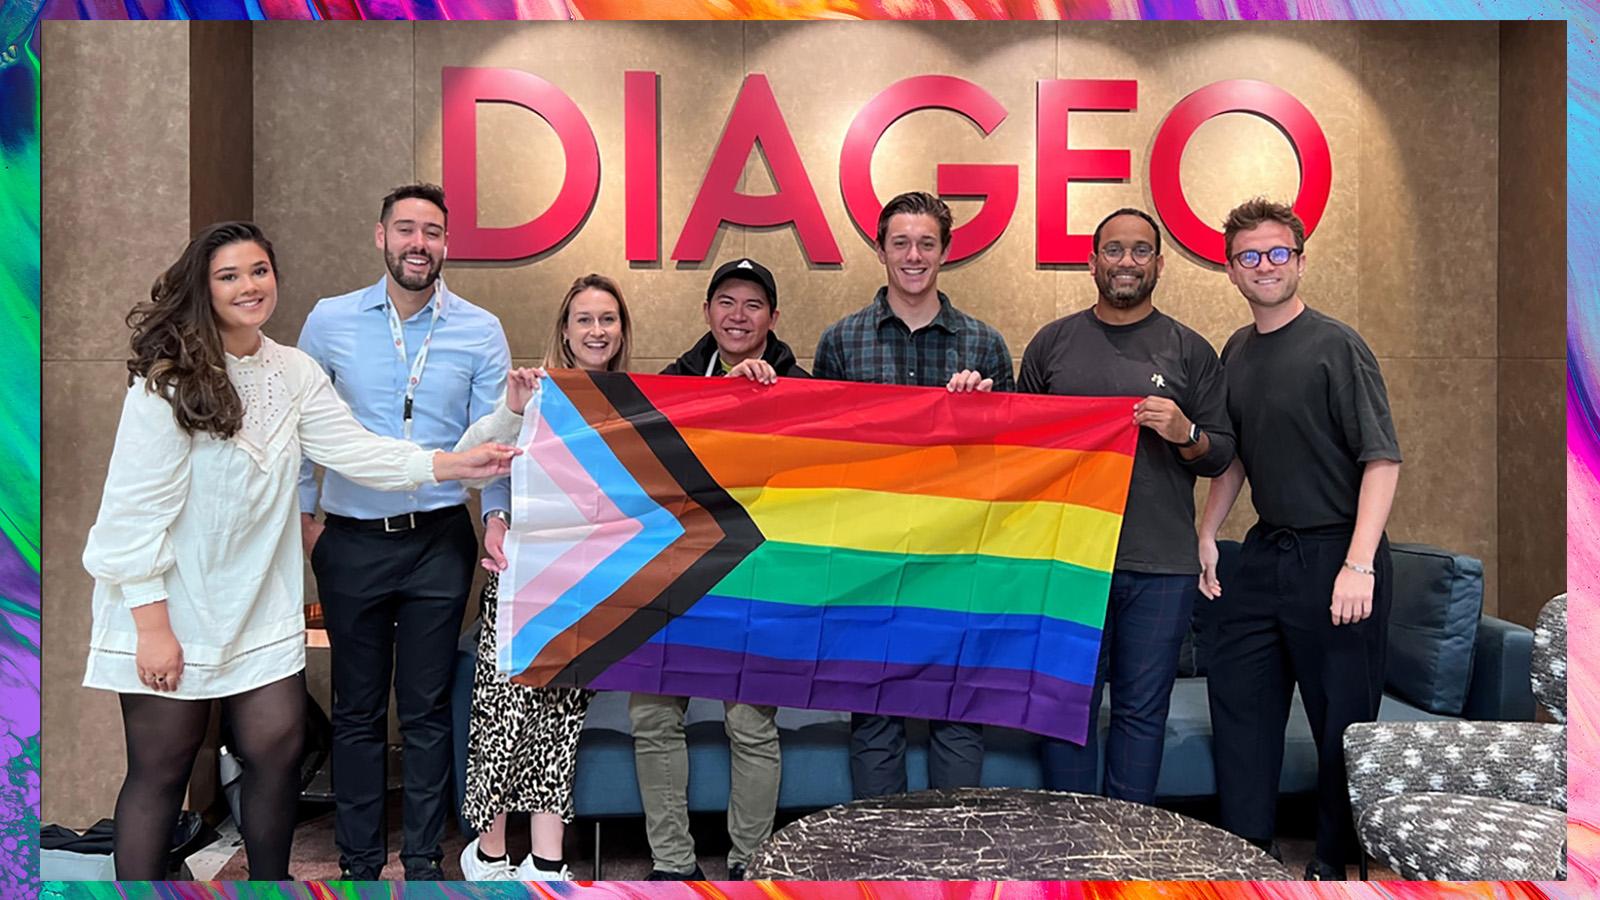 Diverse Diageo Employees holding rainbow flag.